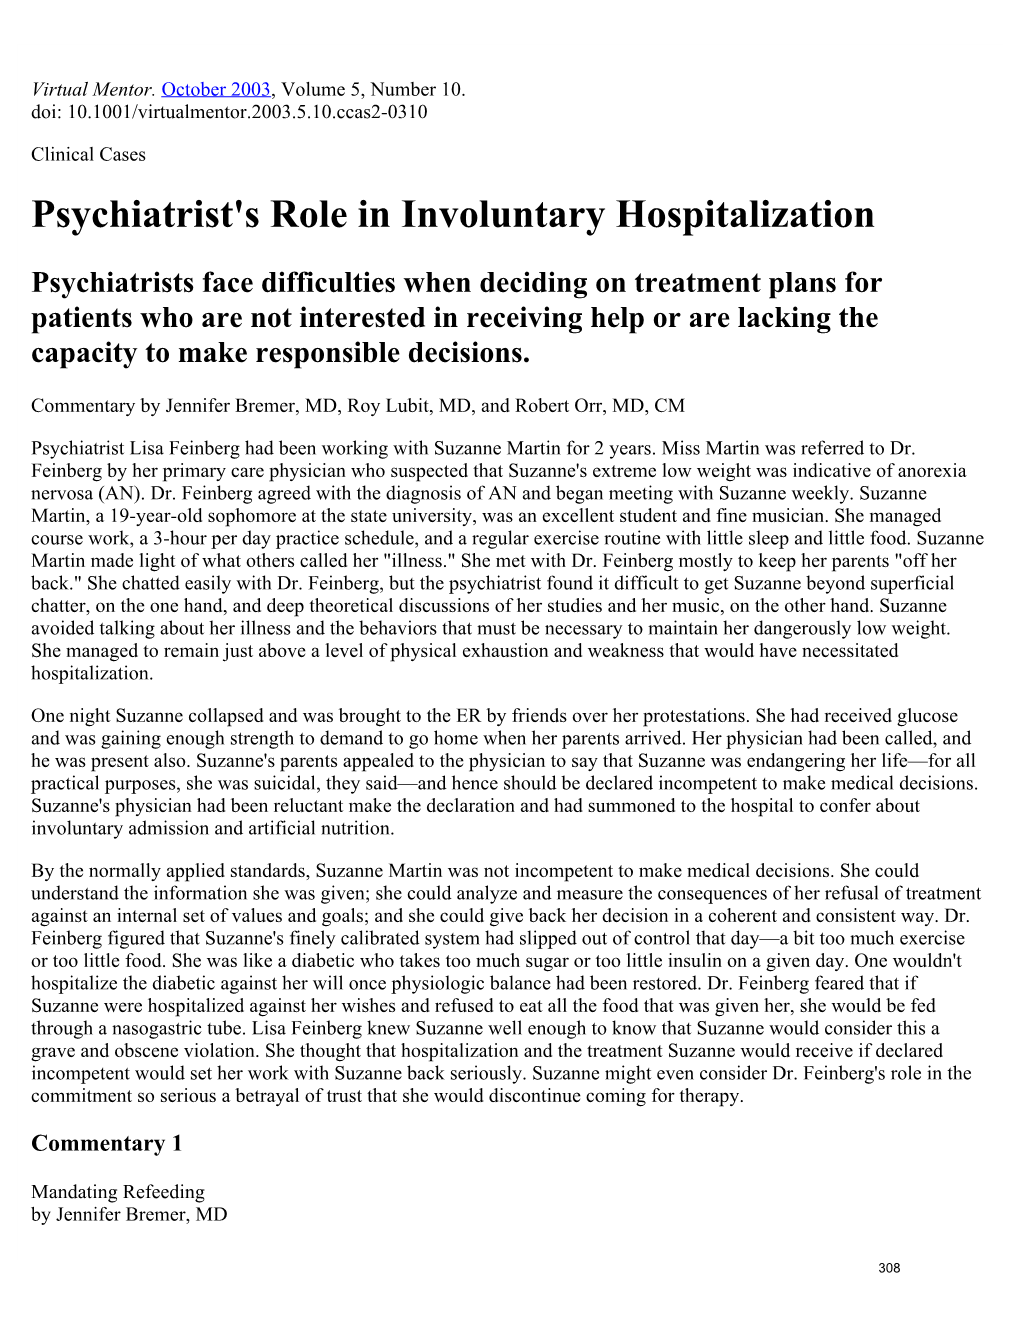 Psychiatrist's Role in Involuntary Hospitalization, Oct 03 ... AMA